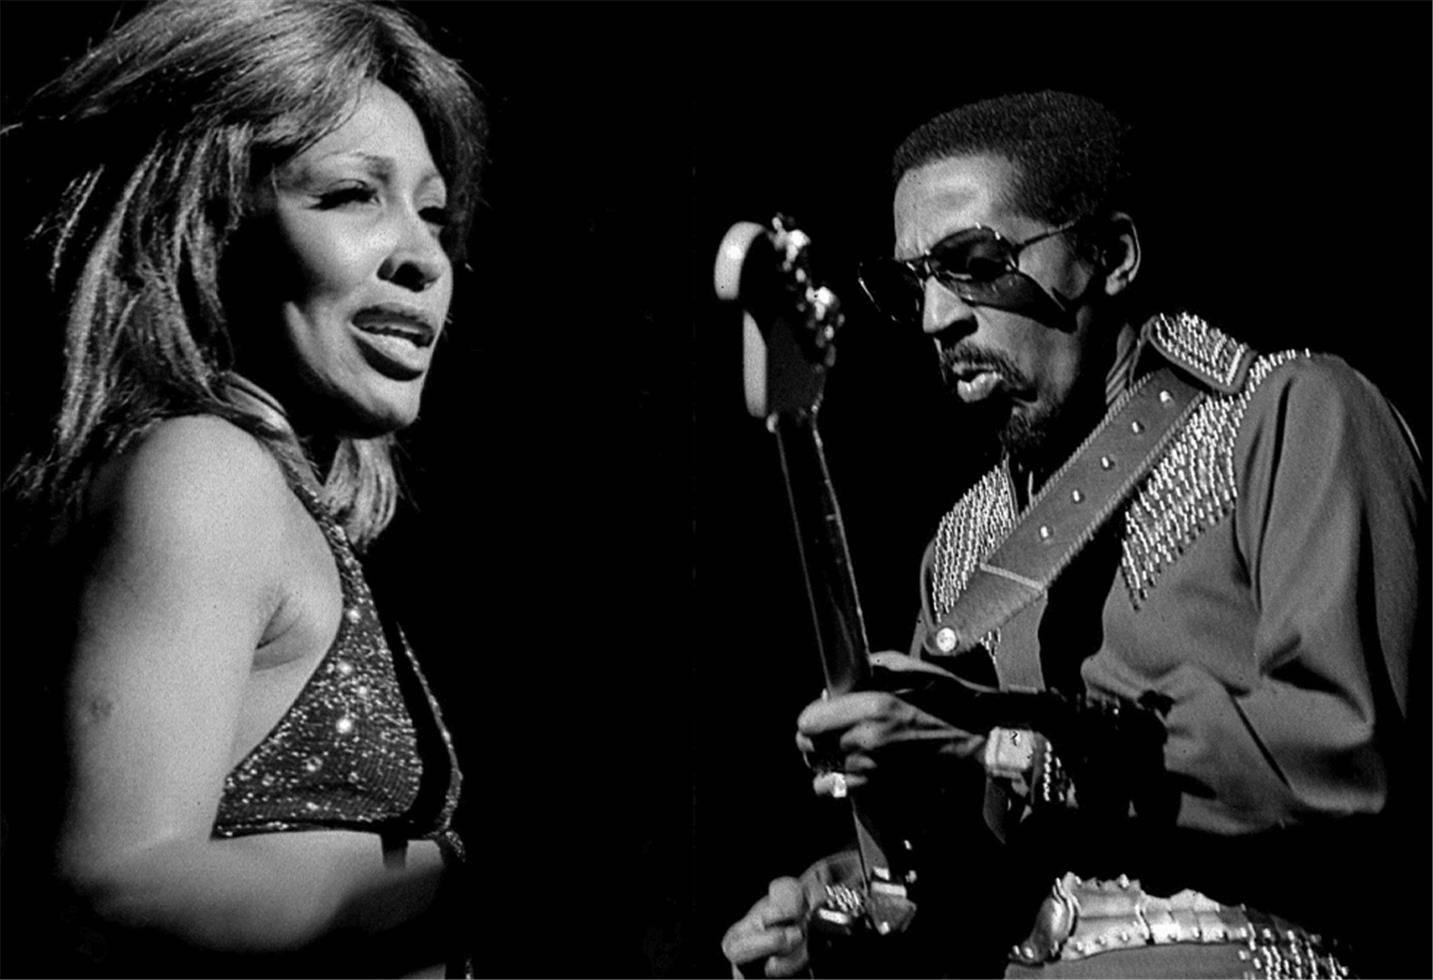 Richard E. Aaron Black and White Photograph - Ike & Tina Turner, Academy of Music, NYC, 1975